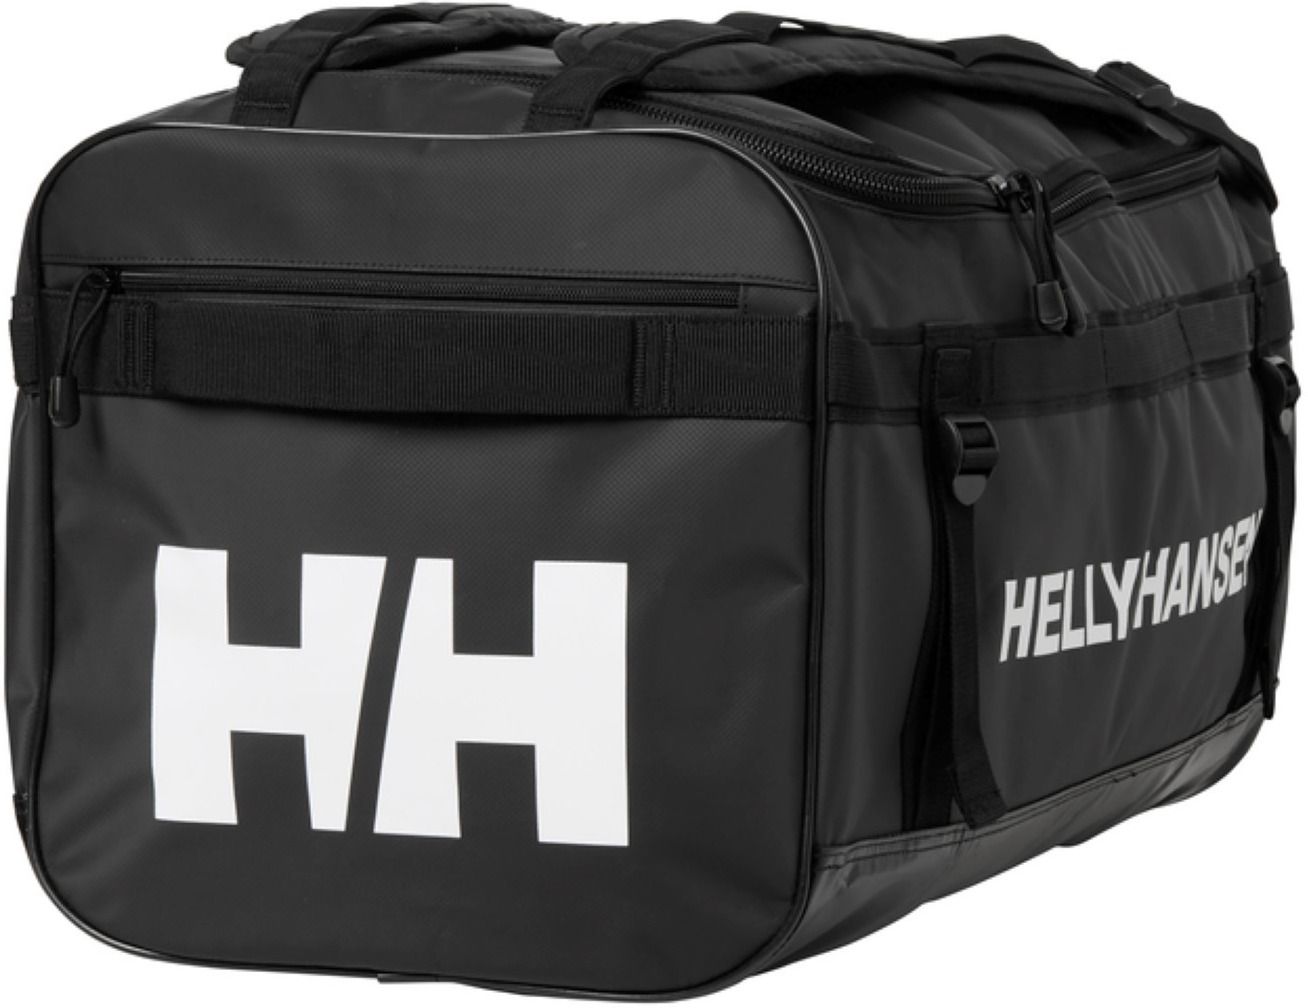  Helly Hansen Hh Classic Duffel Bag, 67169_990, 